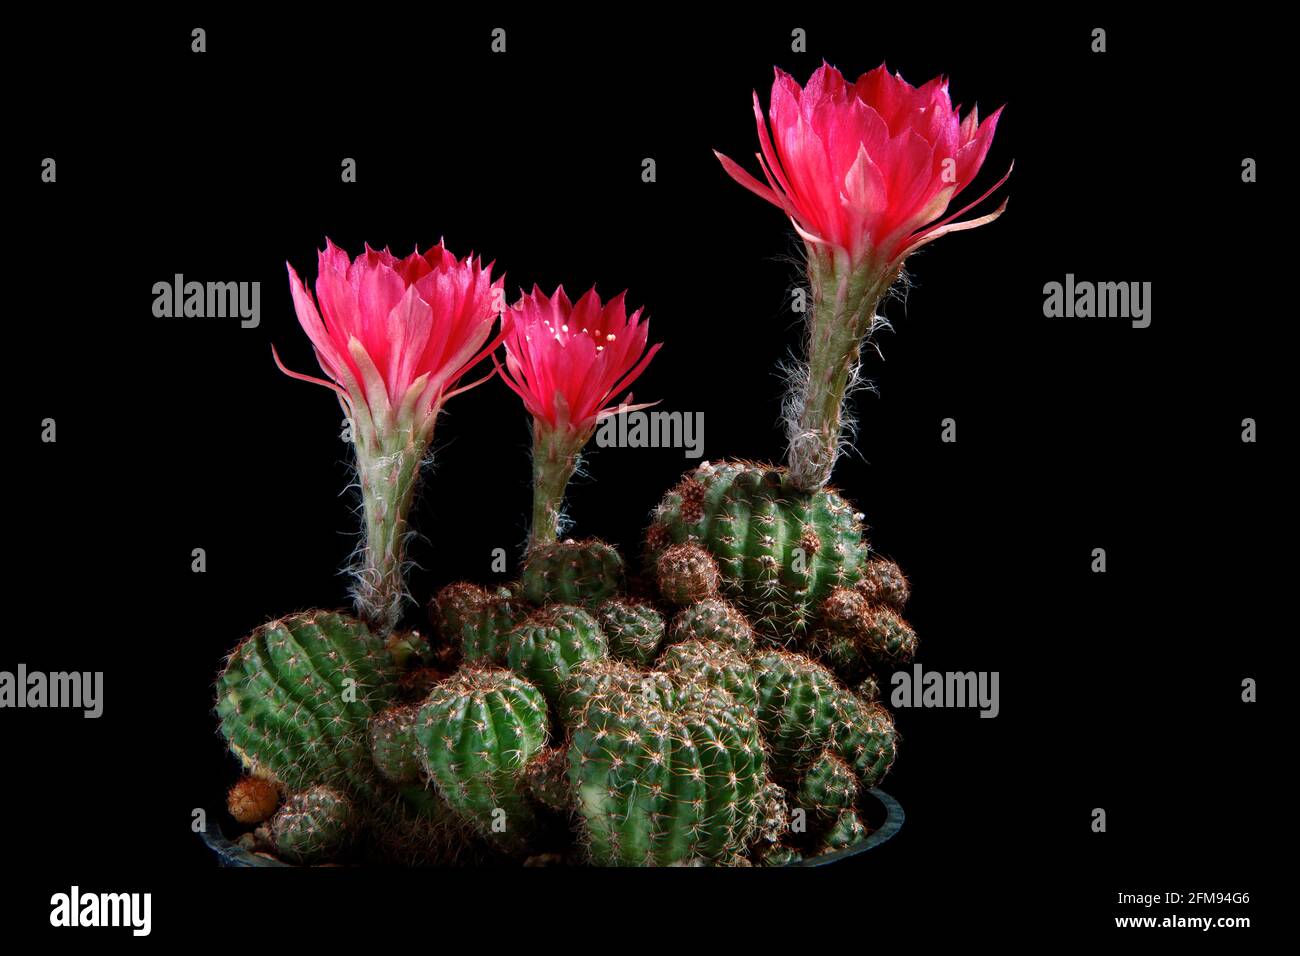 red flower of lobivia cactus blooming against dark background Stock Photo